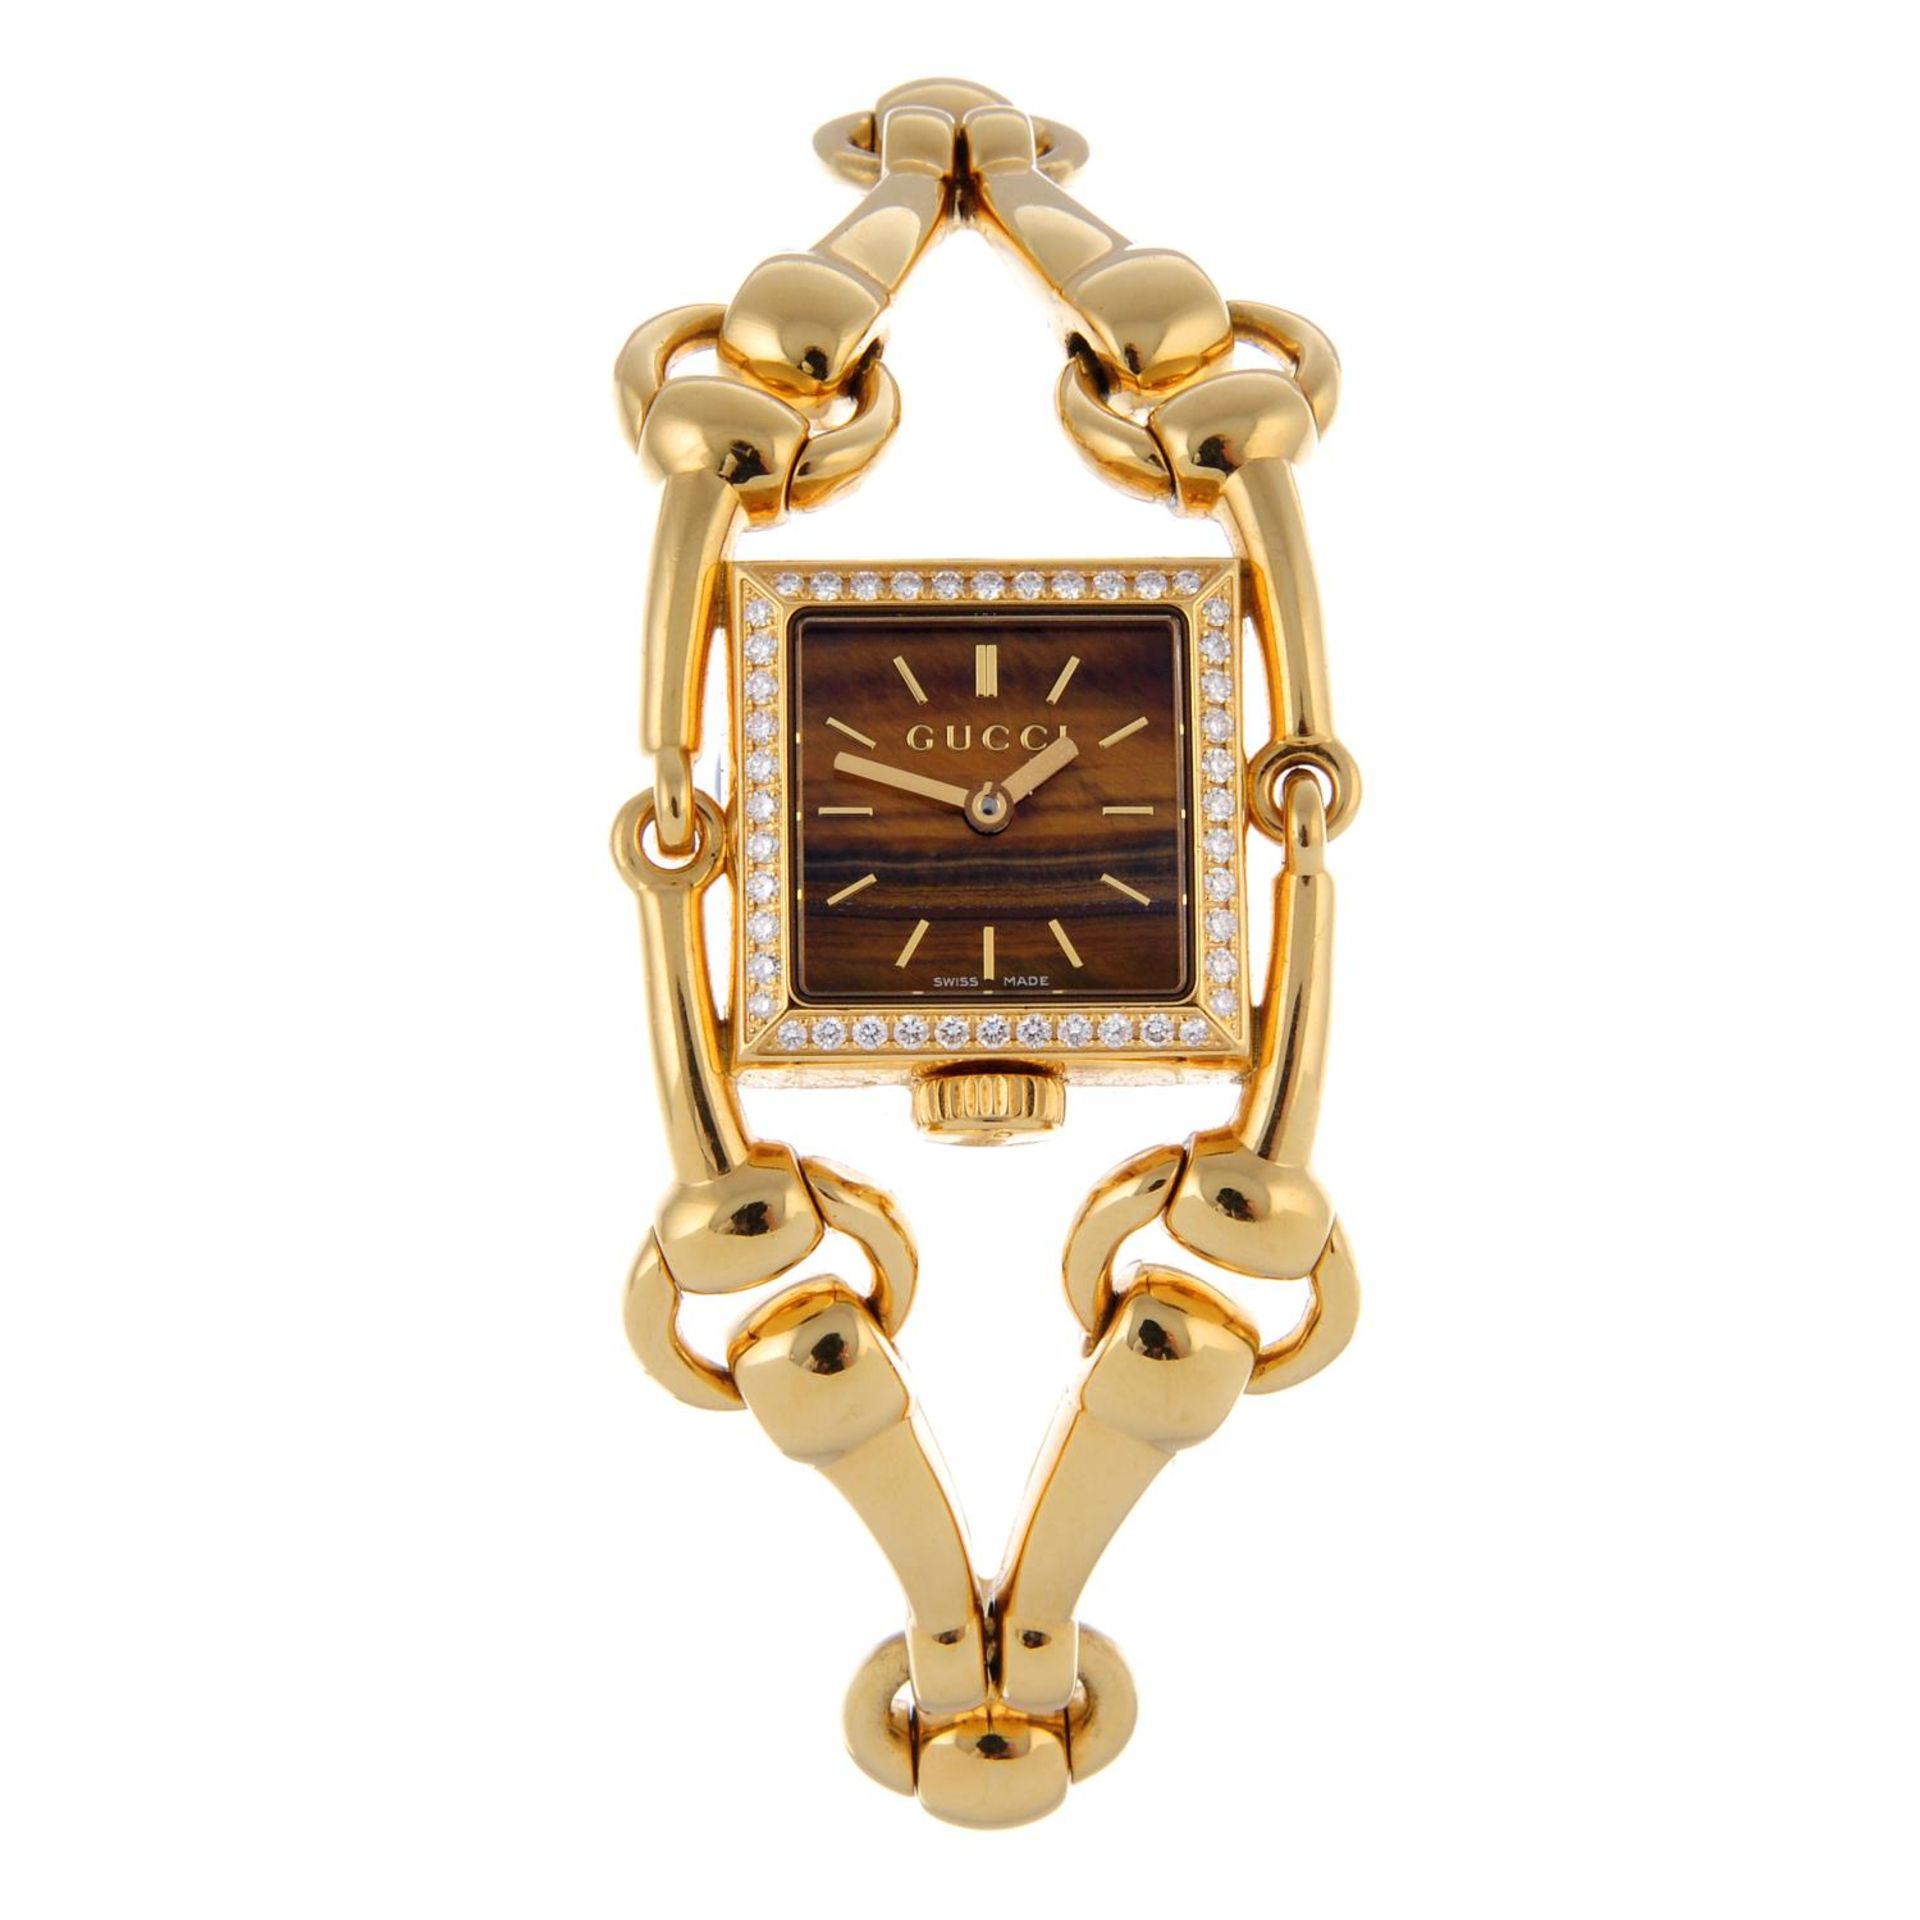 GUCCI - a lady's Signoria bangle watch.